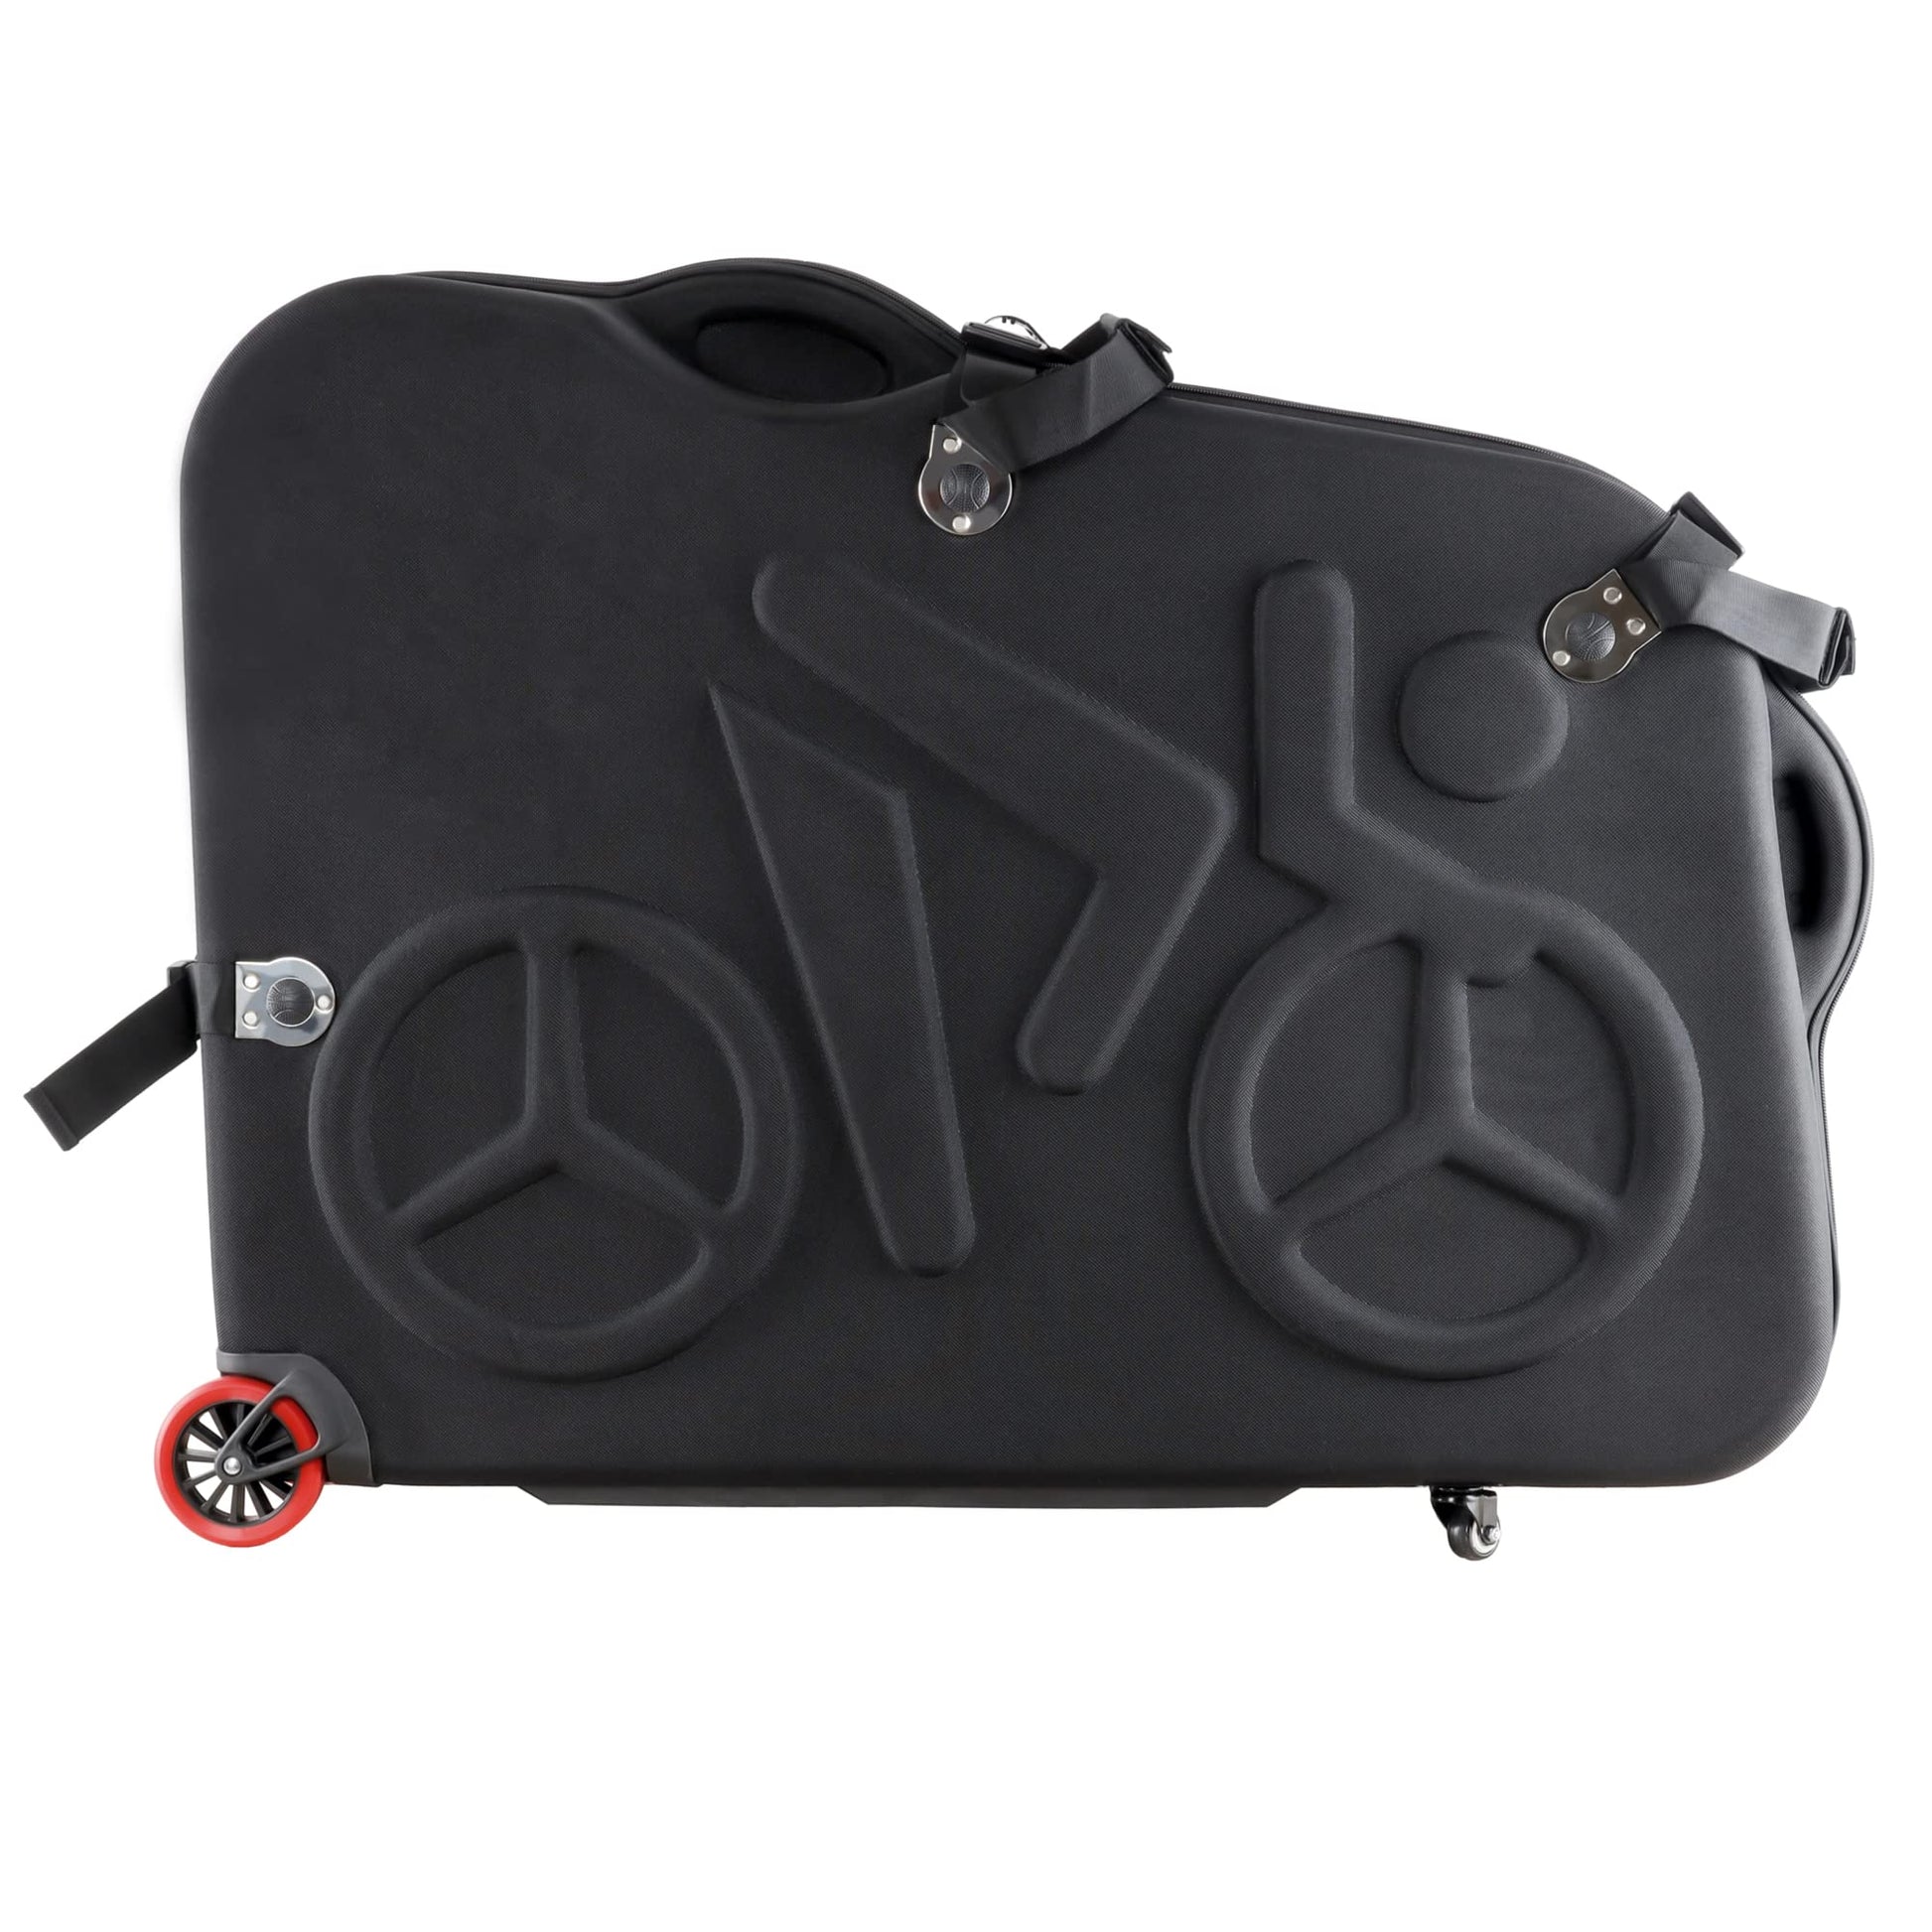 CyclingDeal Bike Travel Case - 700c Bikes - Bicycle Air Flights Travel Hard Case Box Bag EVA Material Lightweight & Durable with TSA Lock - Great for Road Bike 8